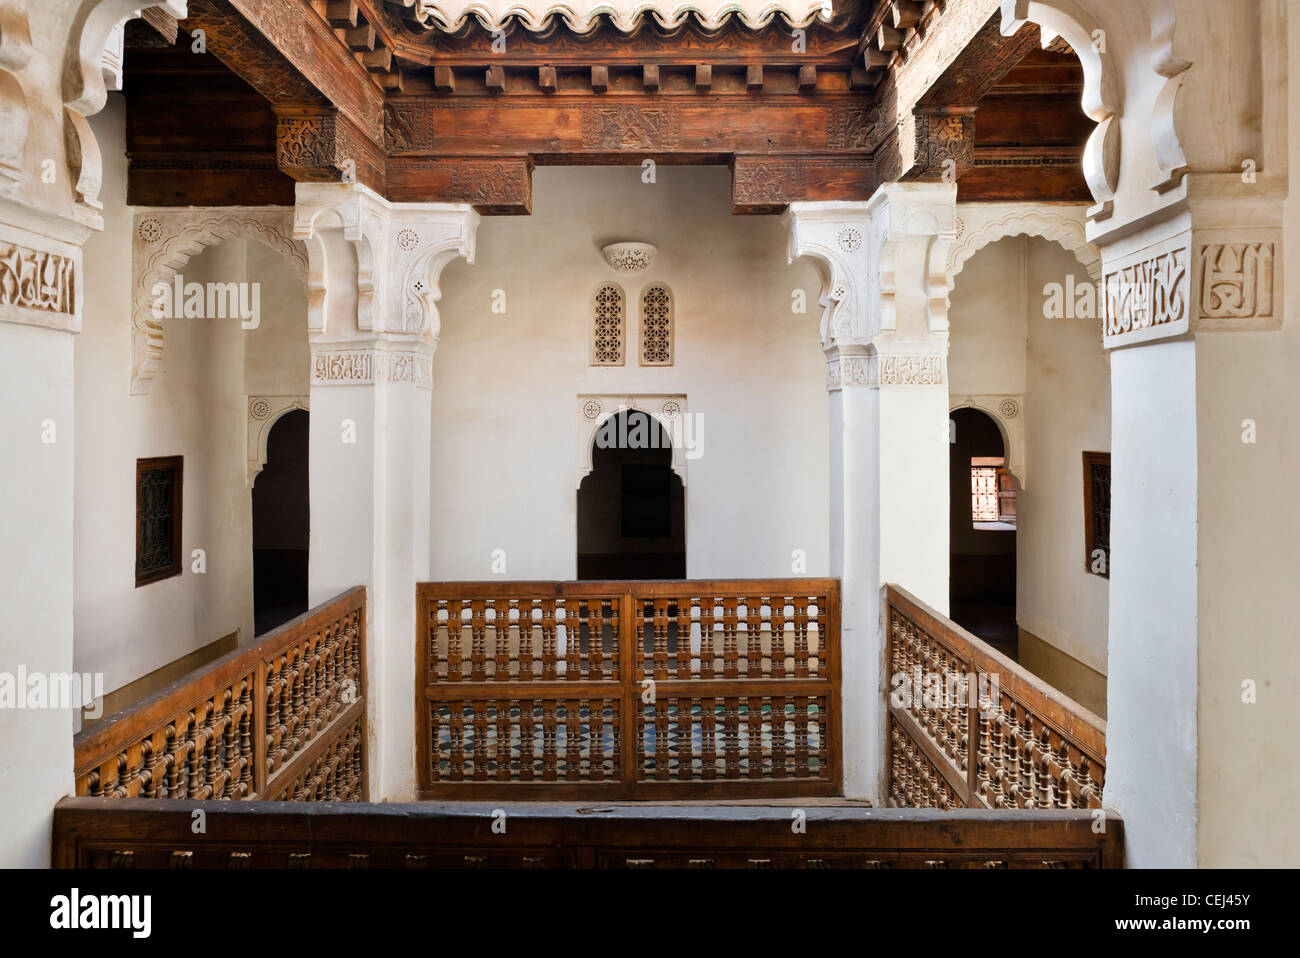 Interior of the Ben Yousse Medersa (Madrasa), Medina district, Marrakech, Morocco, North Africa Stock Photo